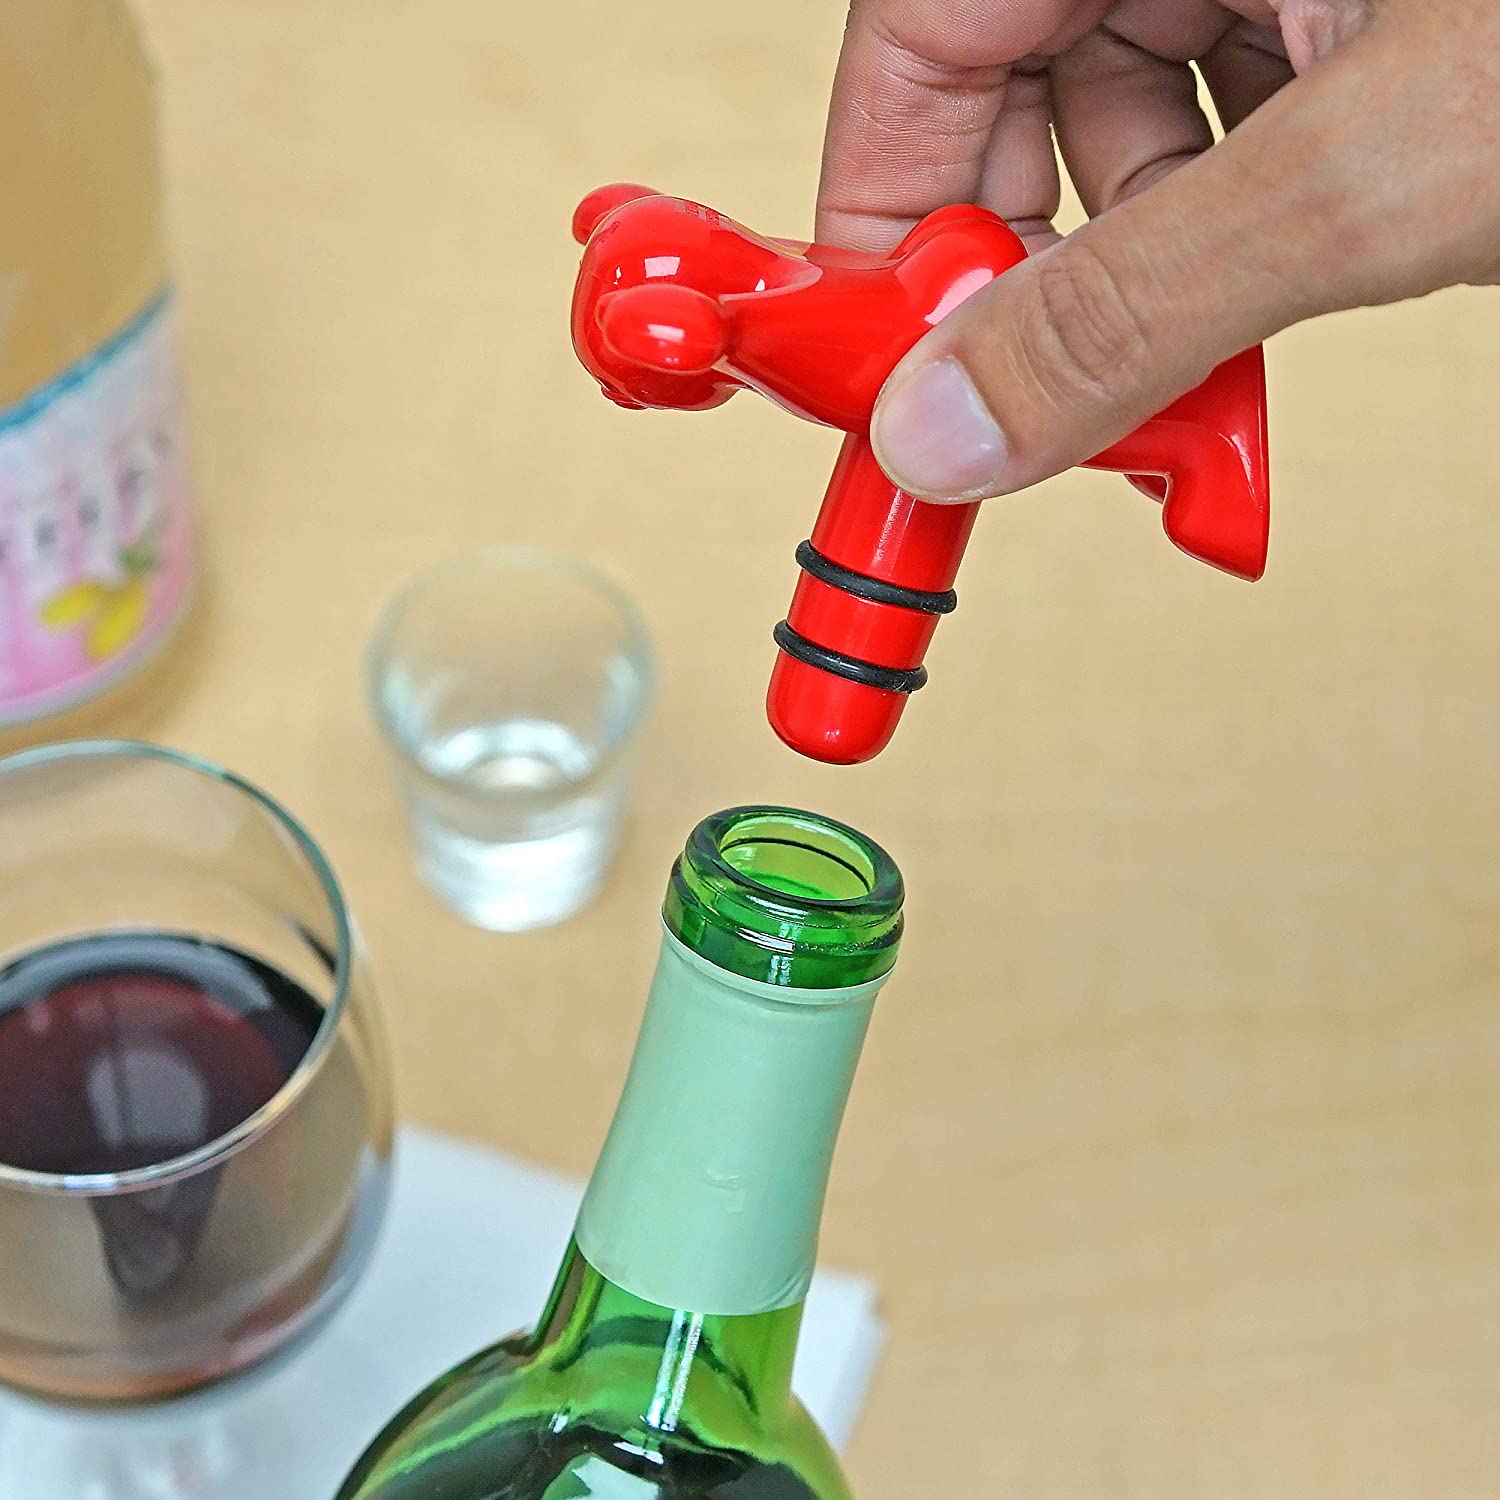 Sir Perky Novelty Wine Stopper - Funny Inappropriate wine bottle stopper